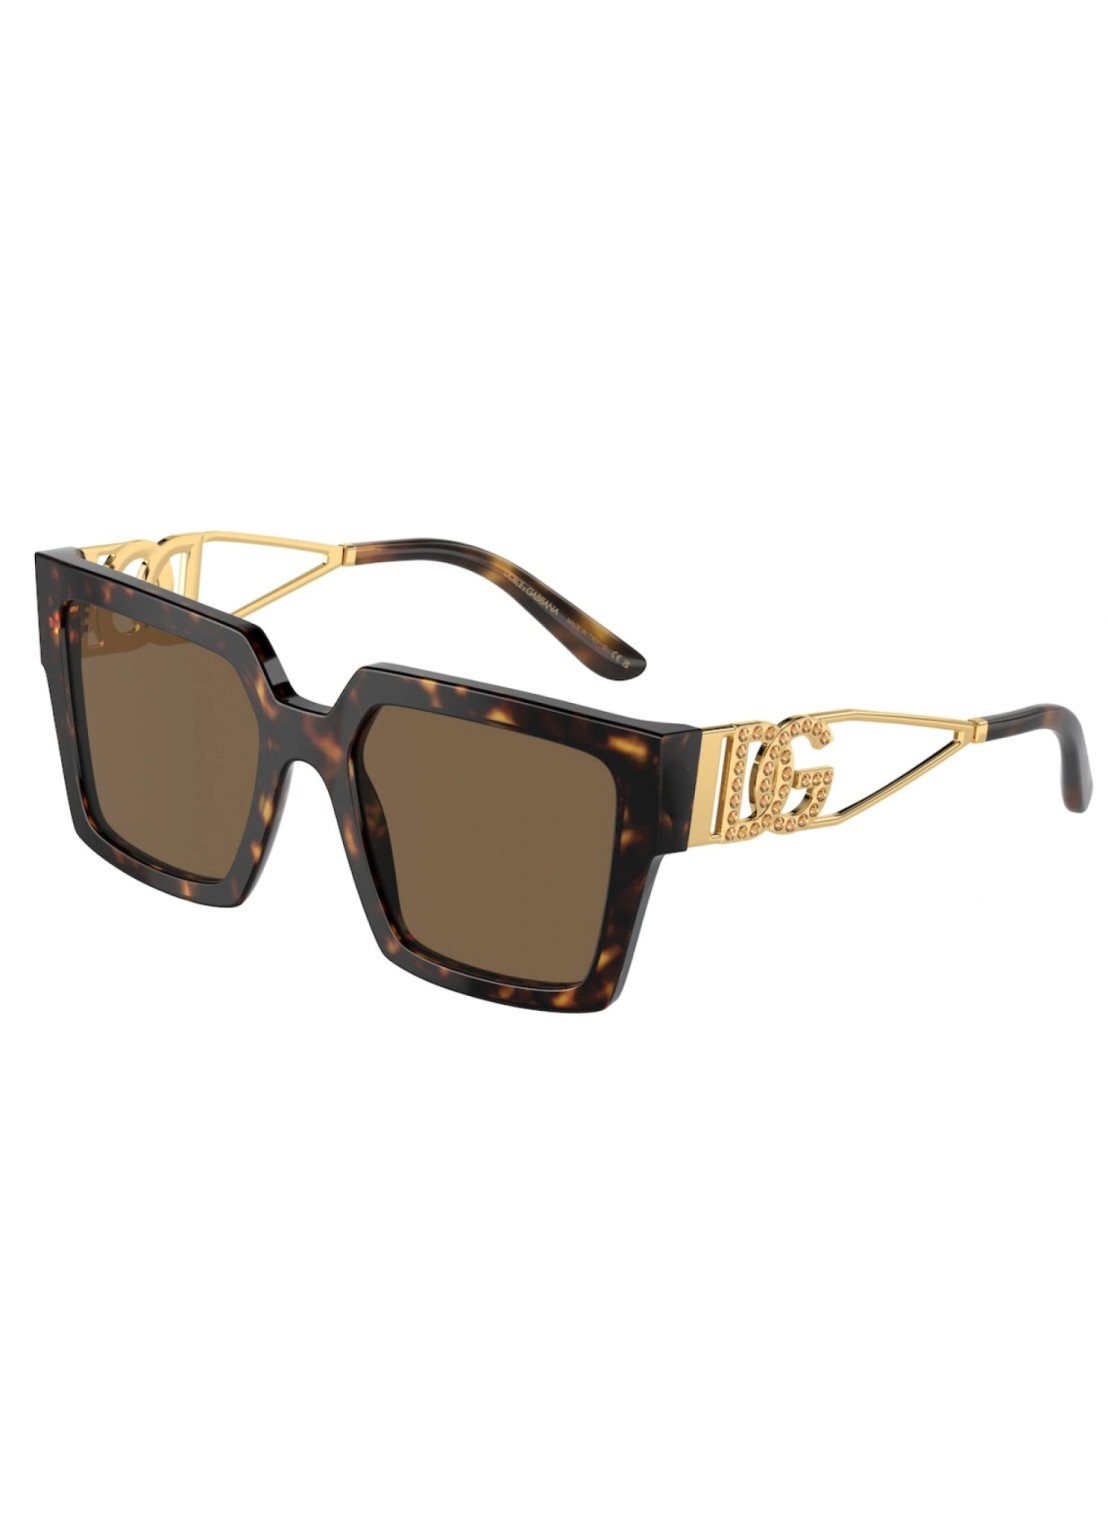 Gafas dolce&gabbana sunglasses woman 0dg4446b 0dg4446b 502 73 talla transparente
 